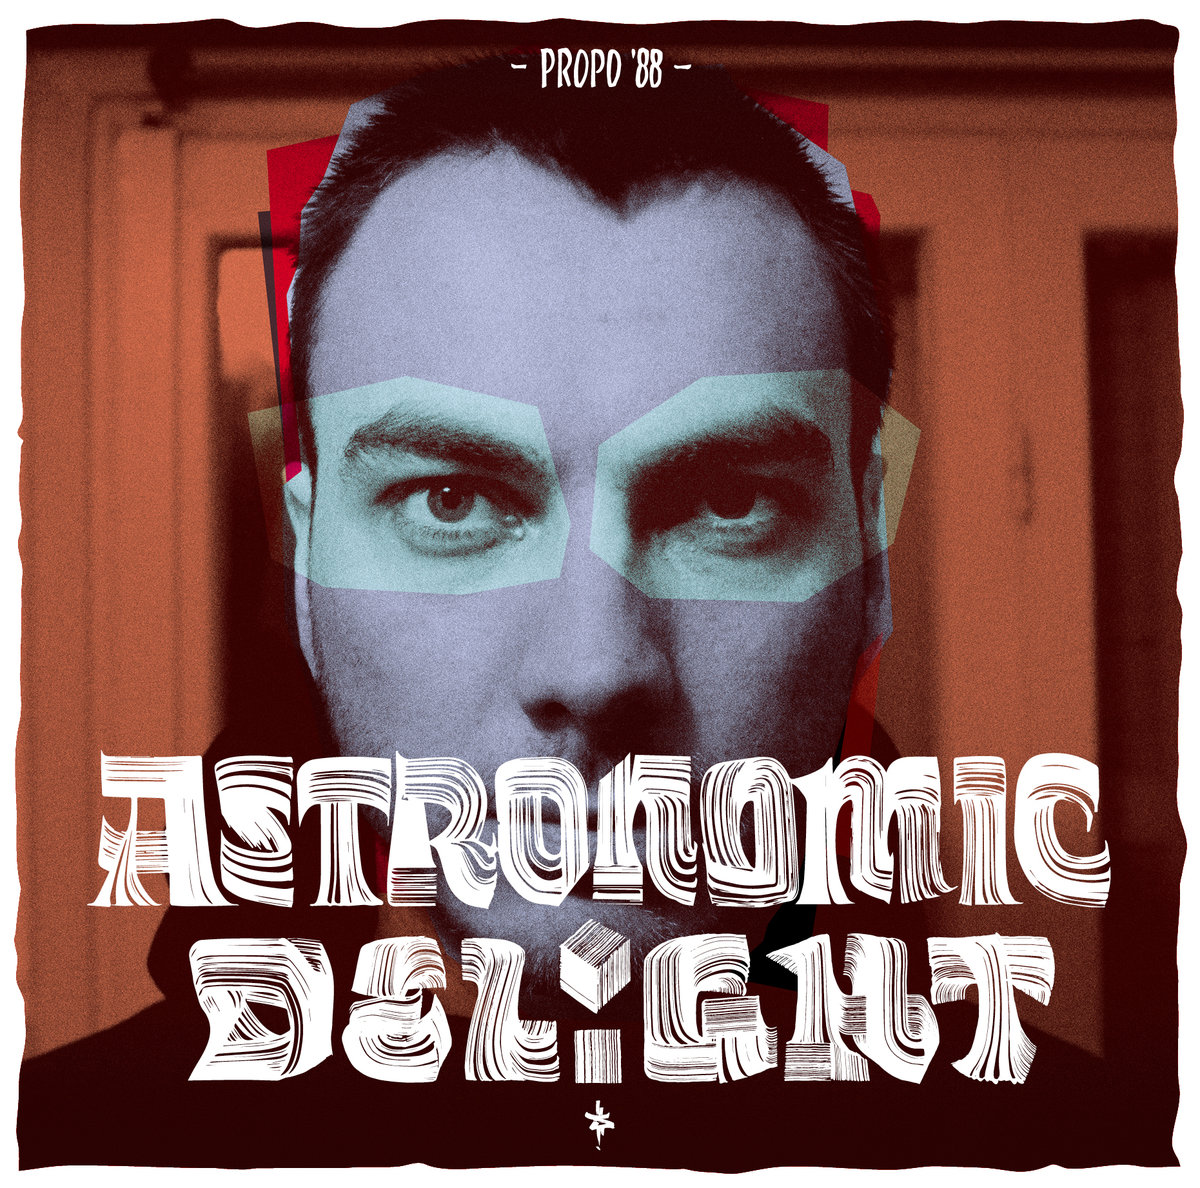 Propo’88 – Astronomic Delight LP